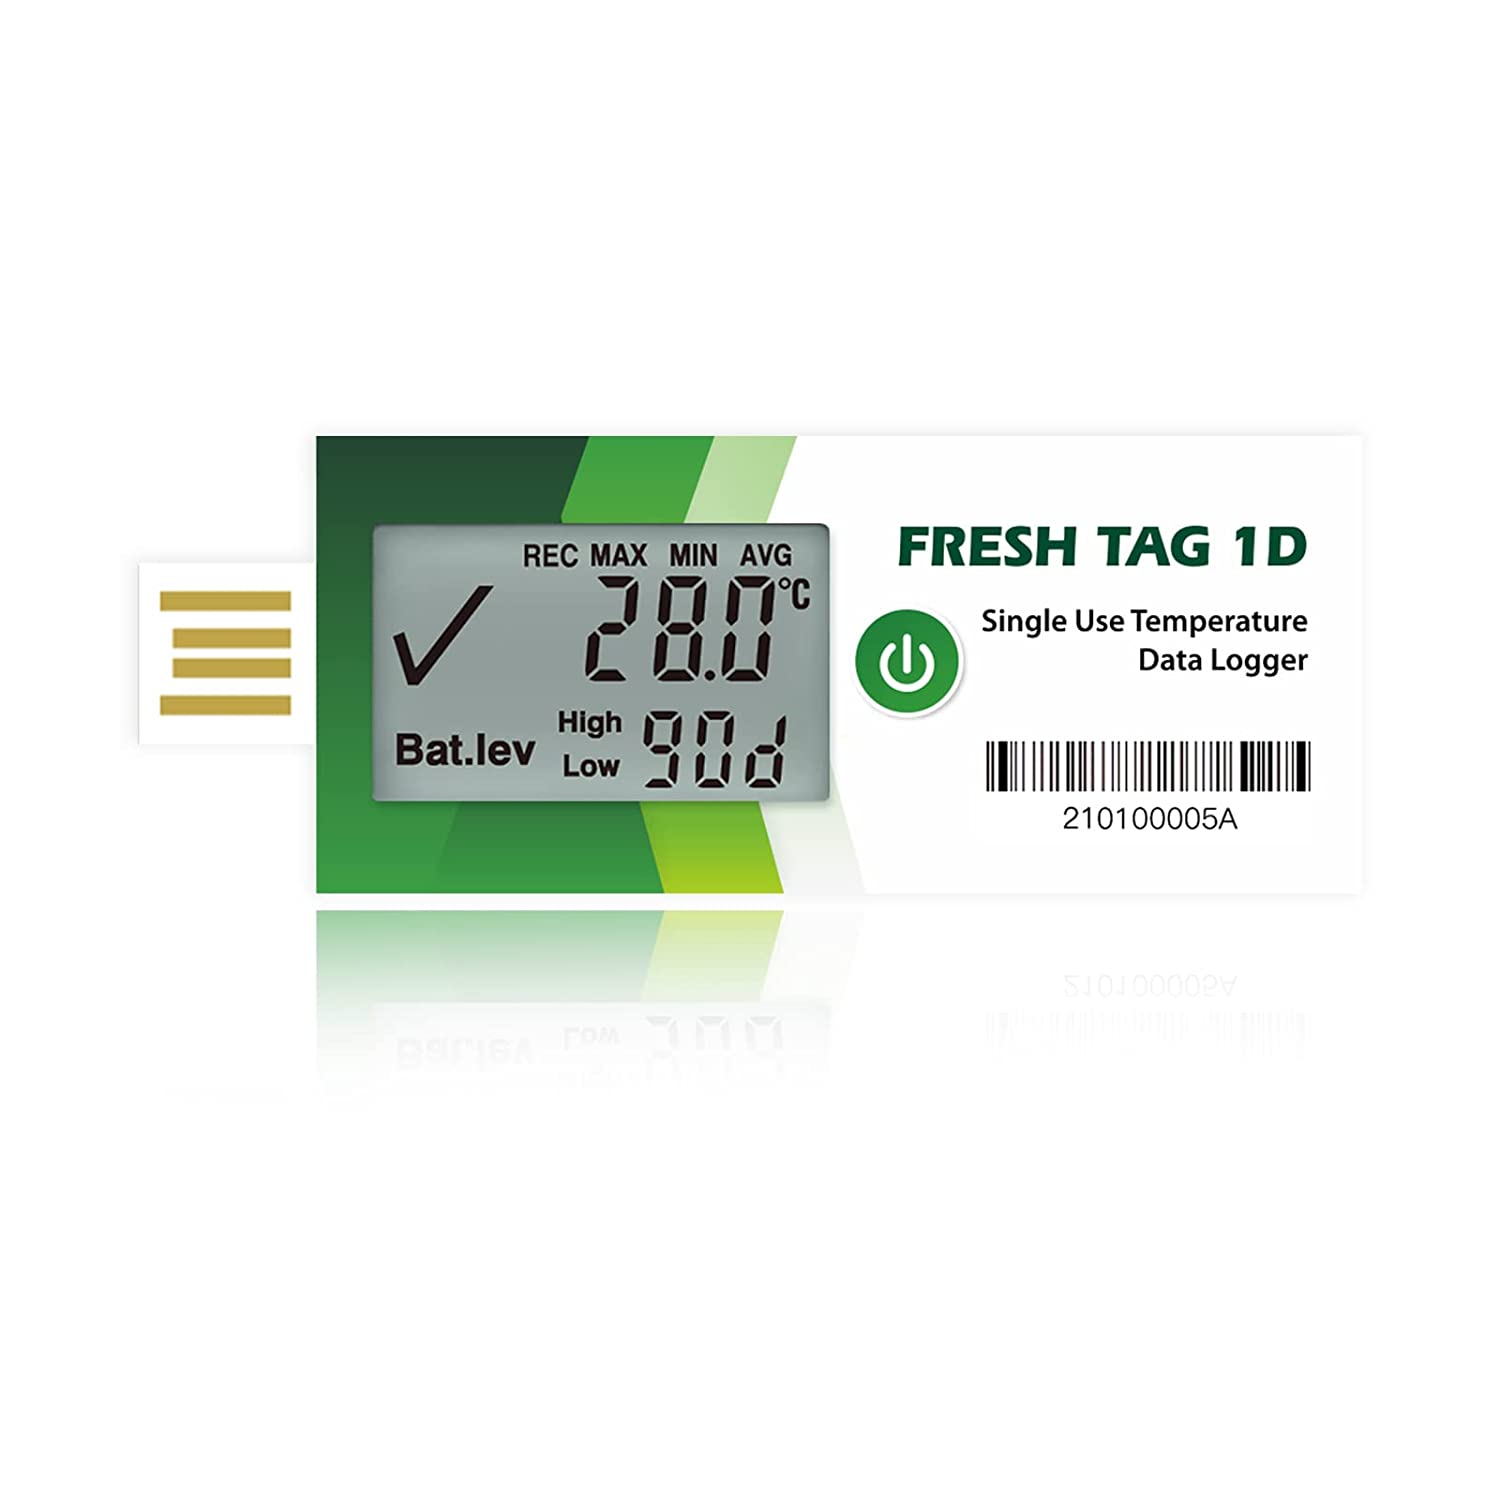 Fresh Tag 1D LCD Temperature Data Logger